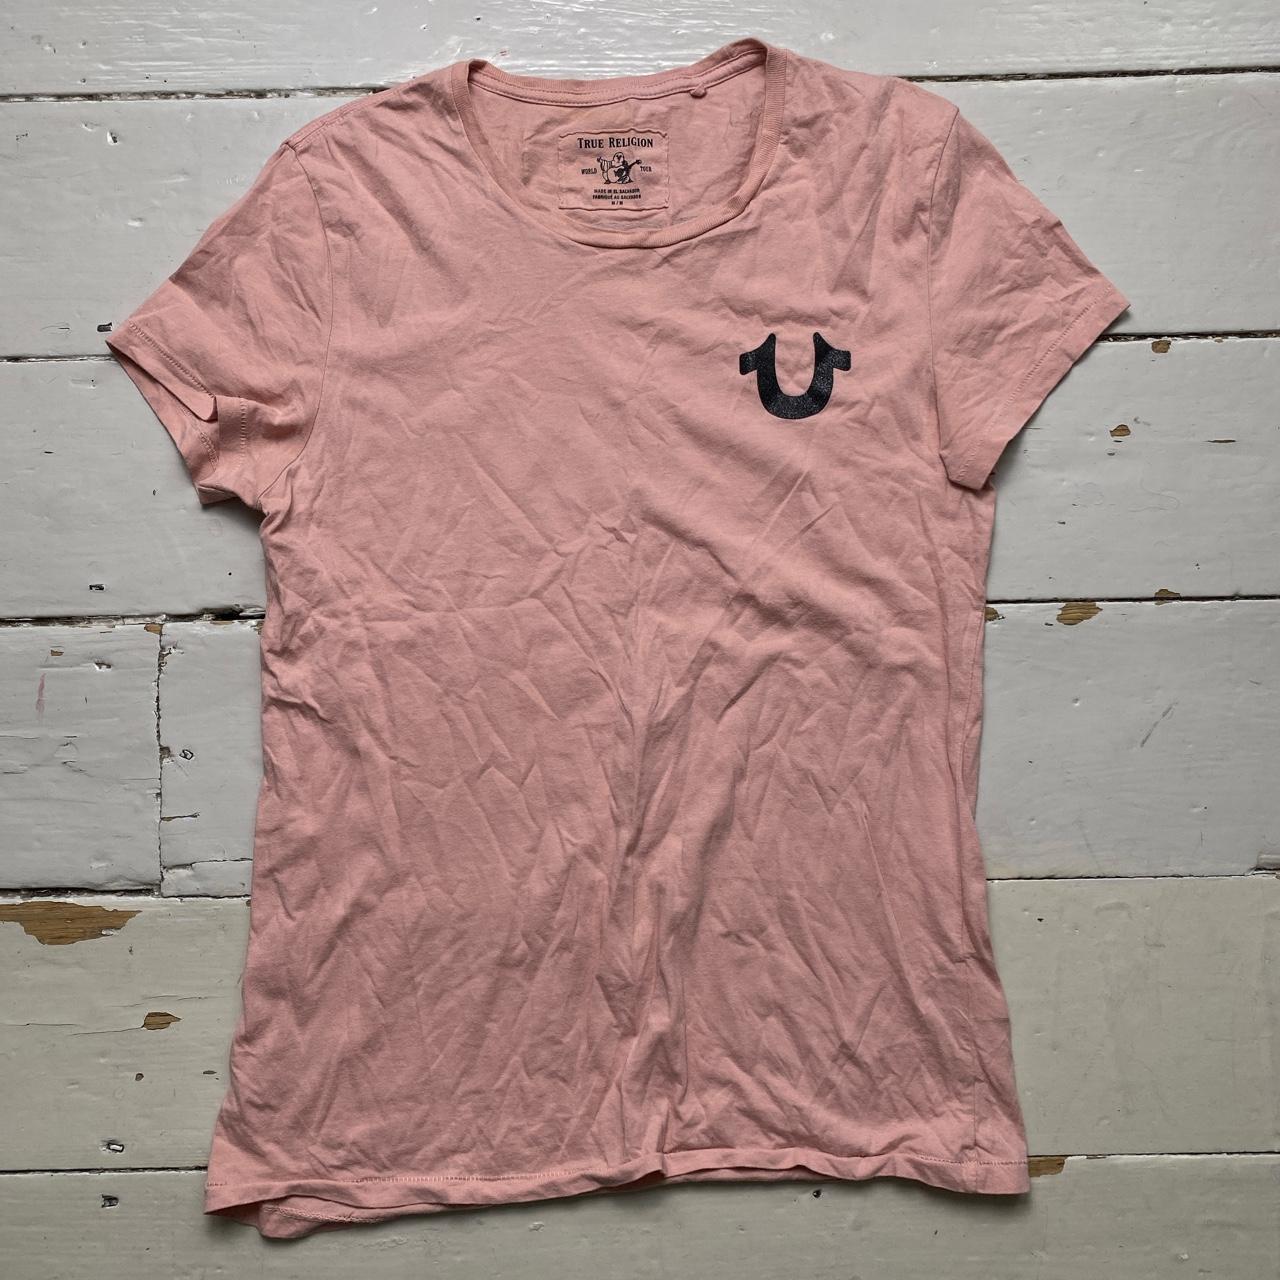 True Religion Pink and Black Buddha Short Sleeve T Shirt